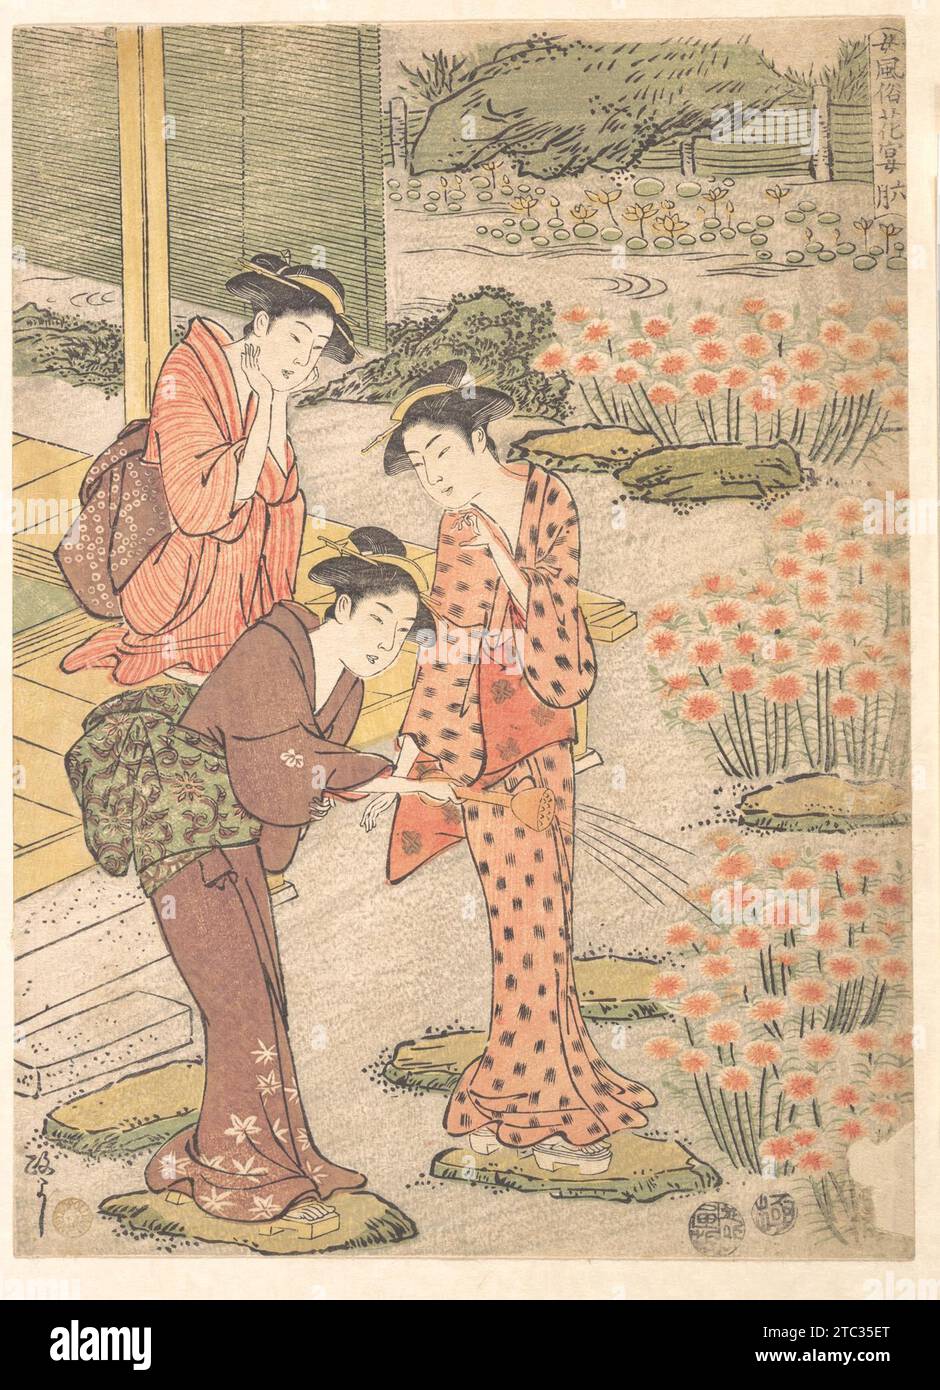 Three Young Women in a Garden where Nadeshiko Pinks are Growing 1914 by Kuwagata Keisai Stock Photo